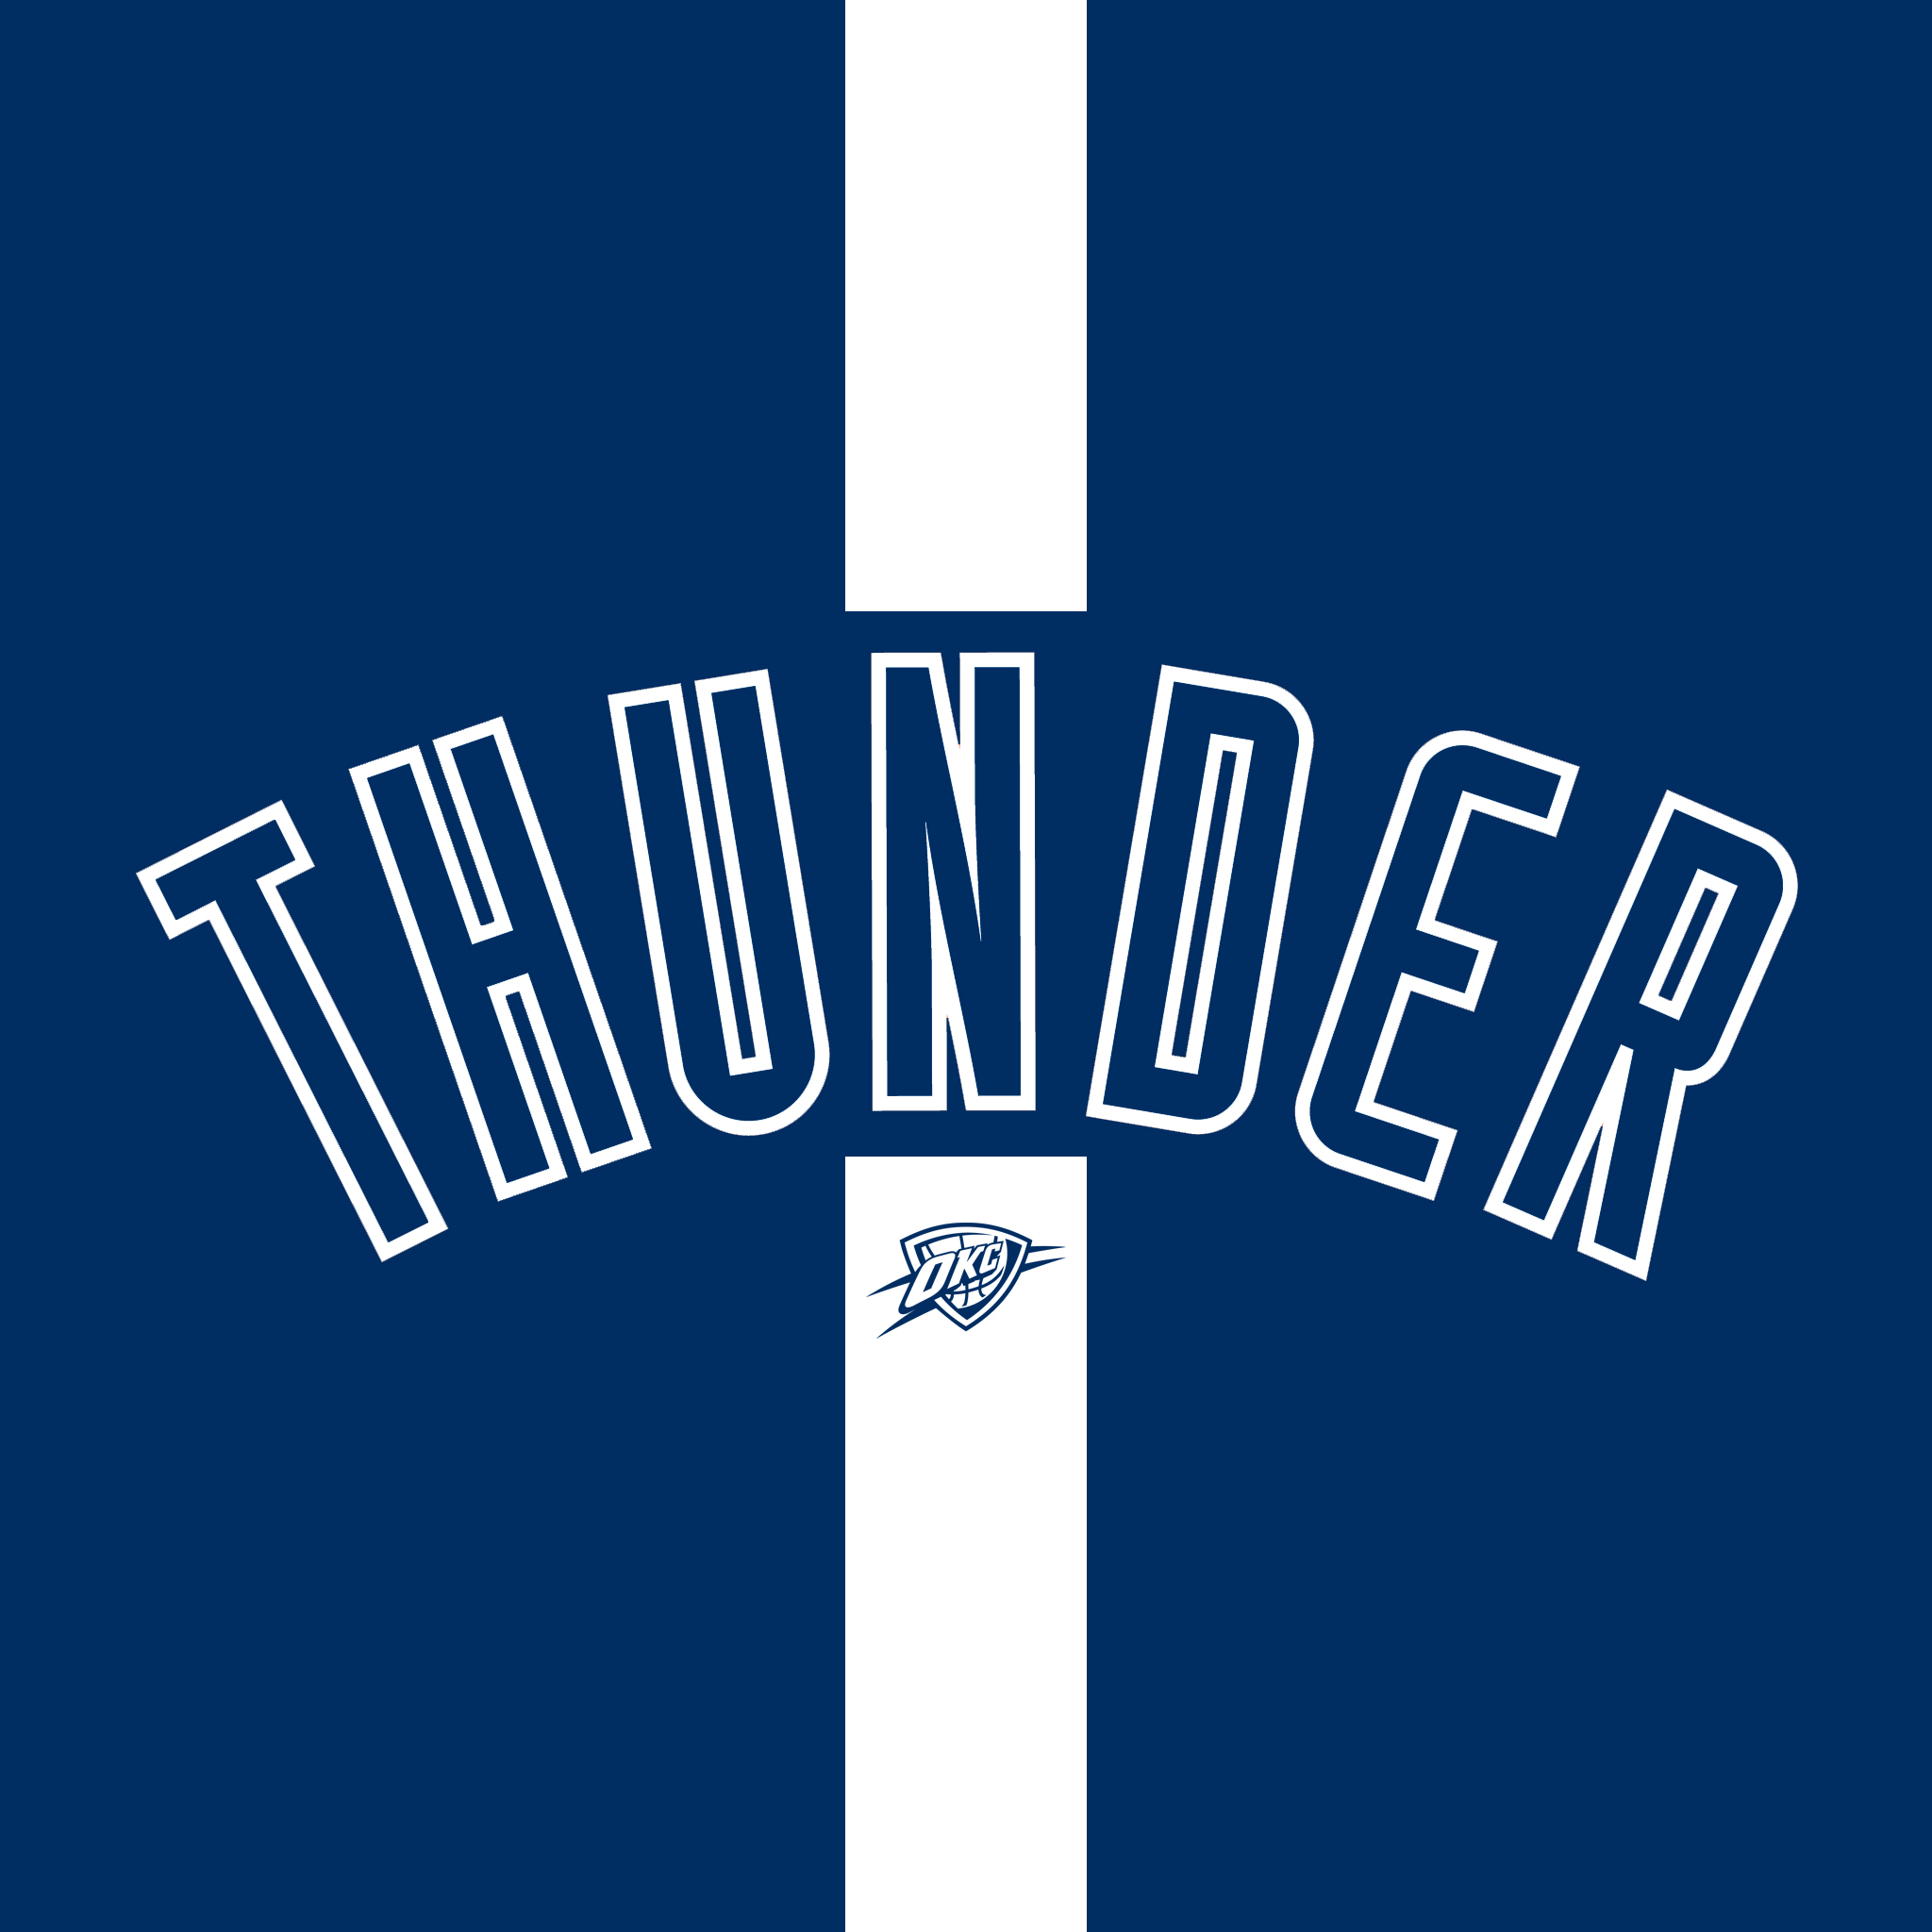 Download Hd Wallpapers Of Oklahoma City Thunder Basketball Team Logo